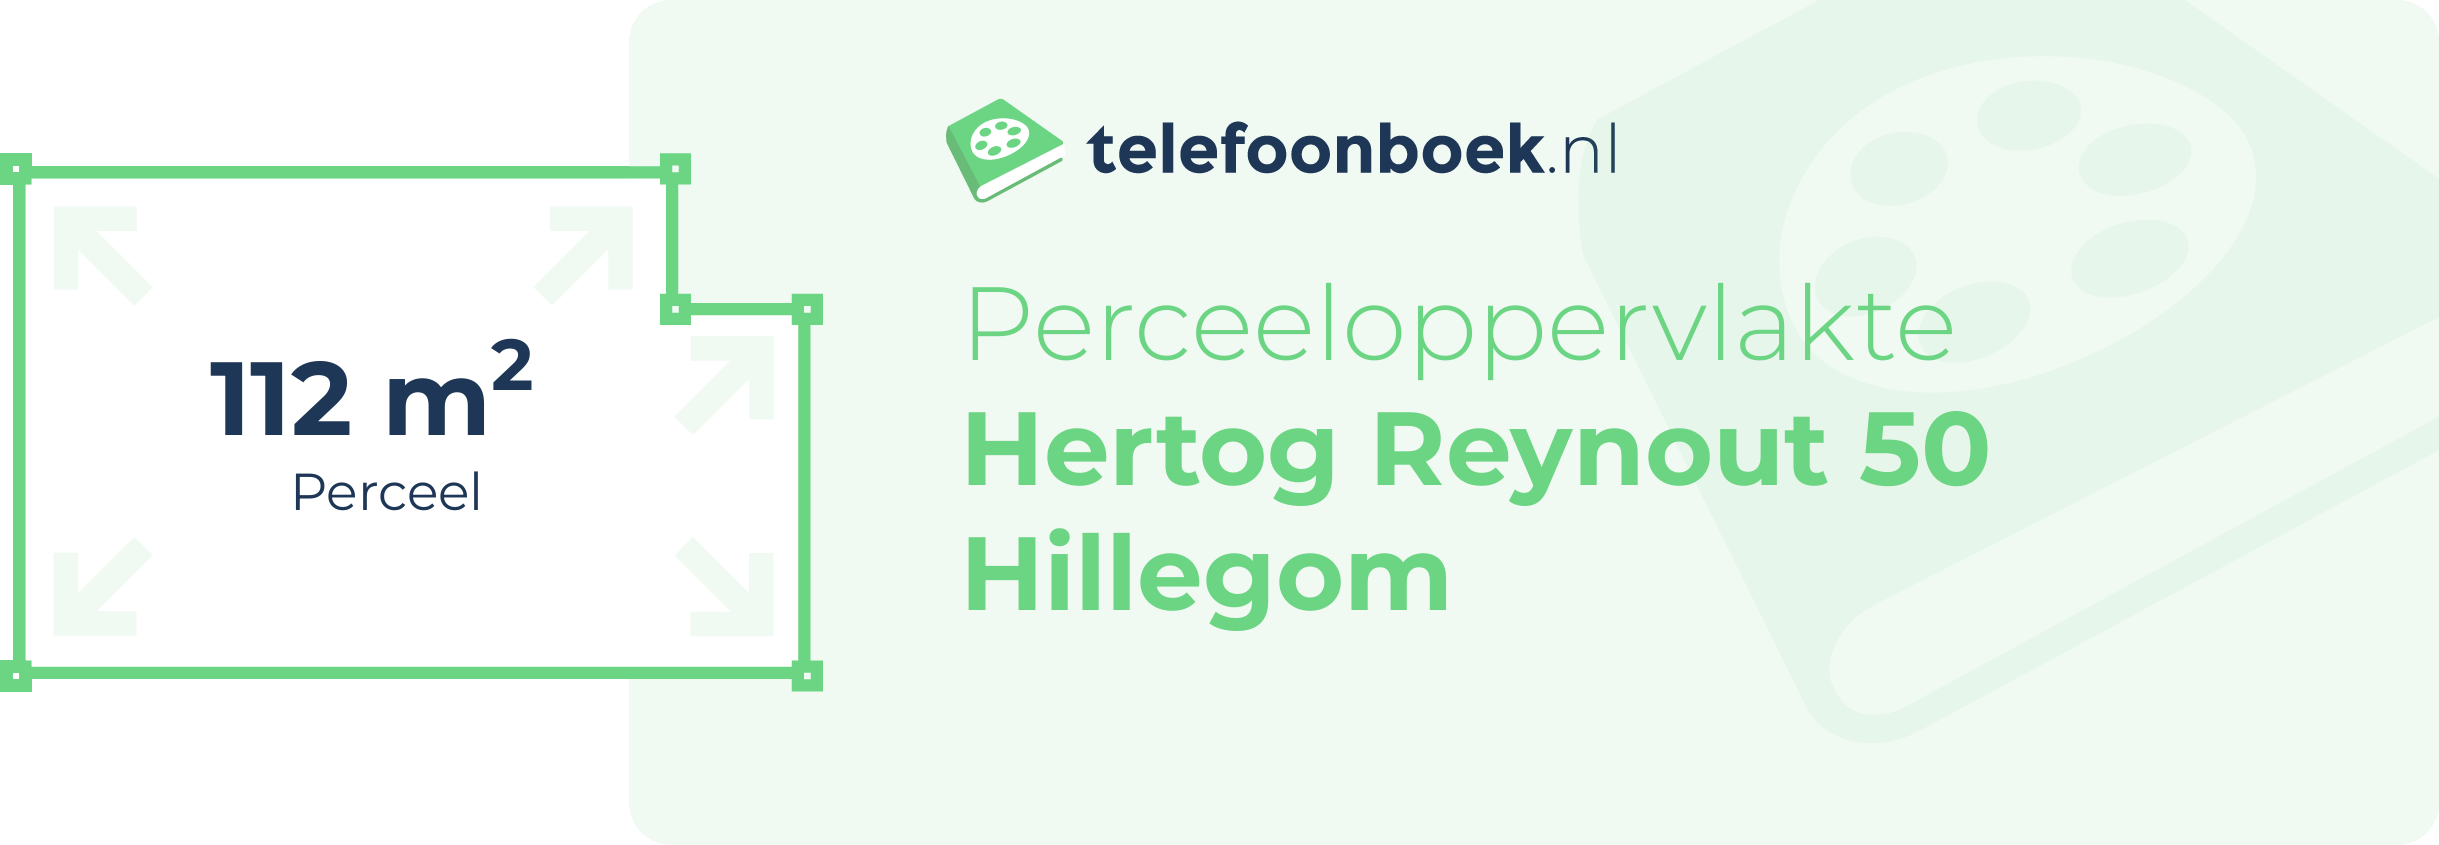 Perceeloppervlakte Hertog Reynout 50 Hillegom